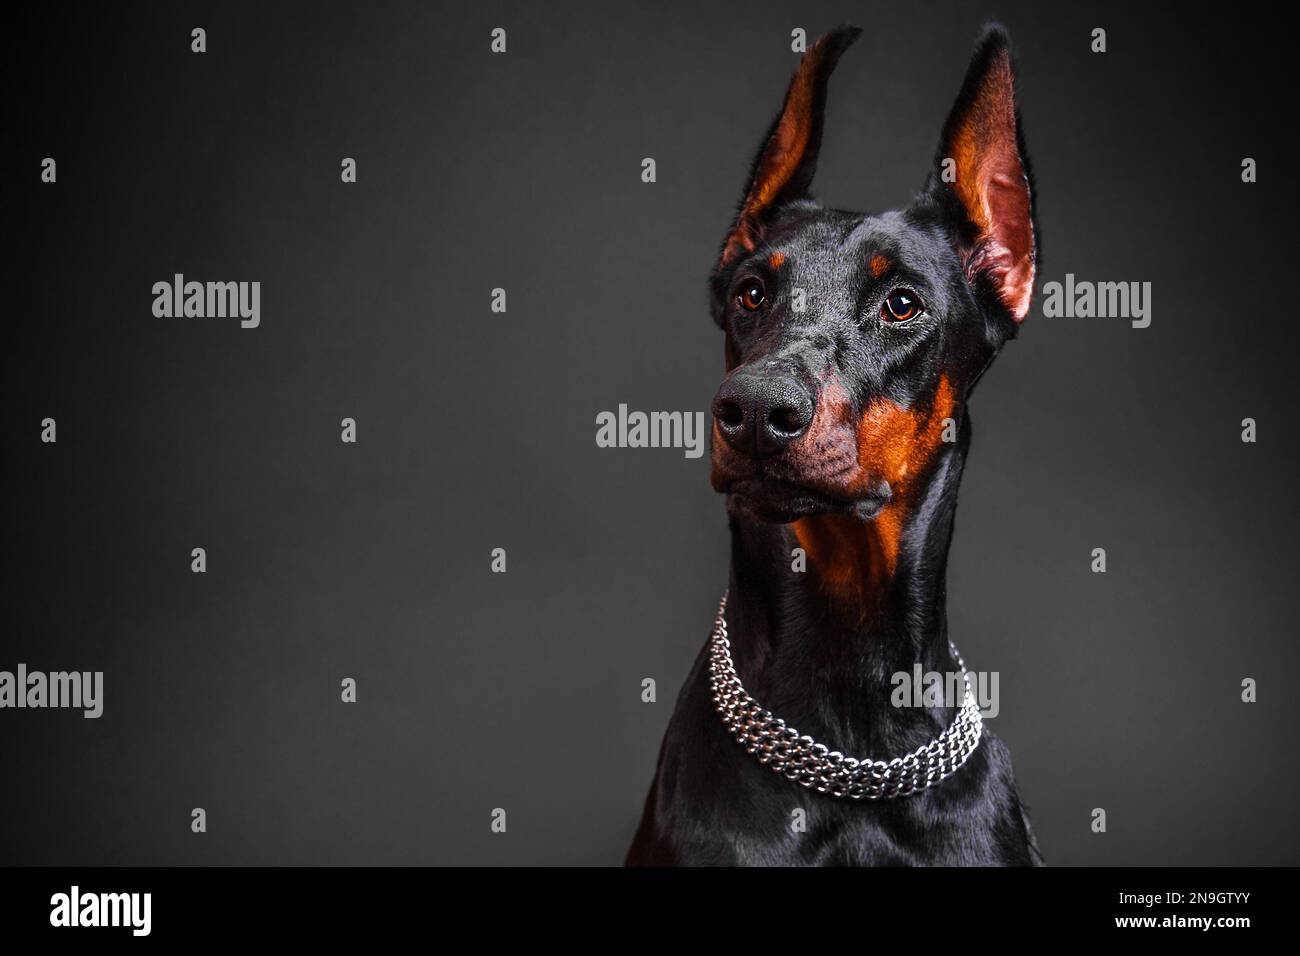 beautiful Doberman breed dog on a dark background Stock Photo